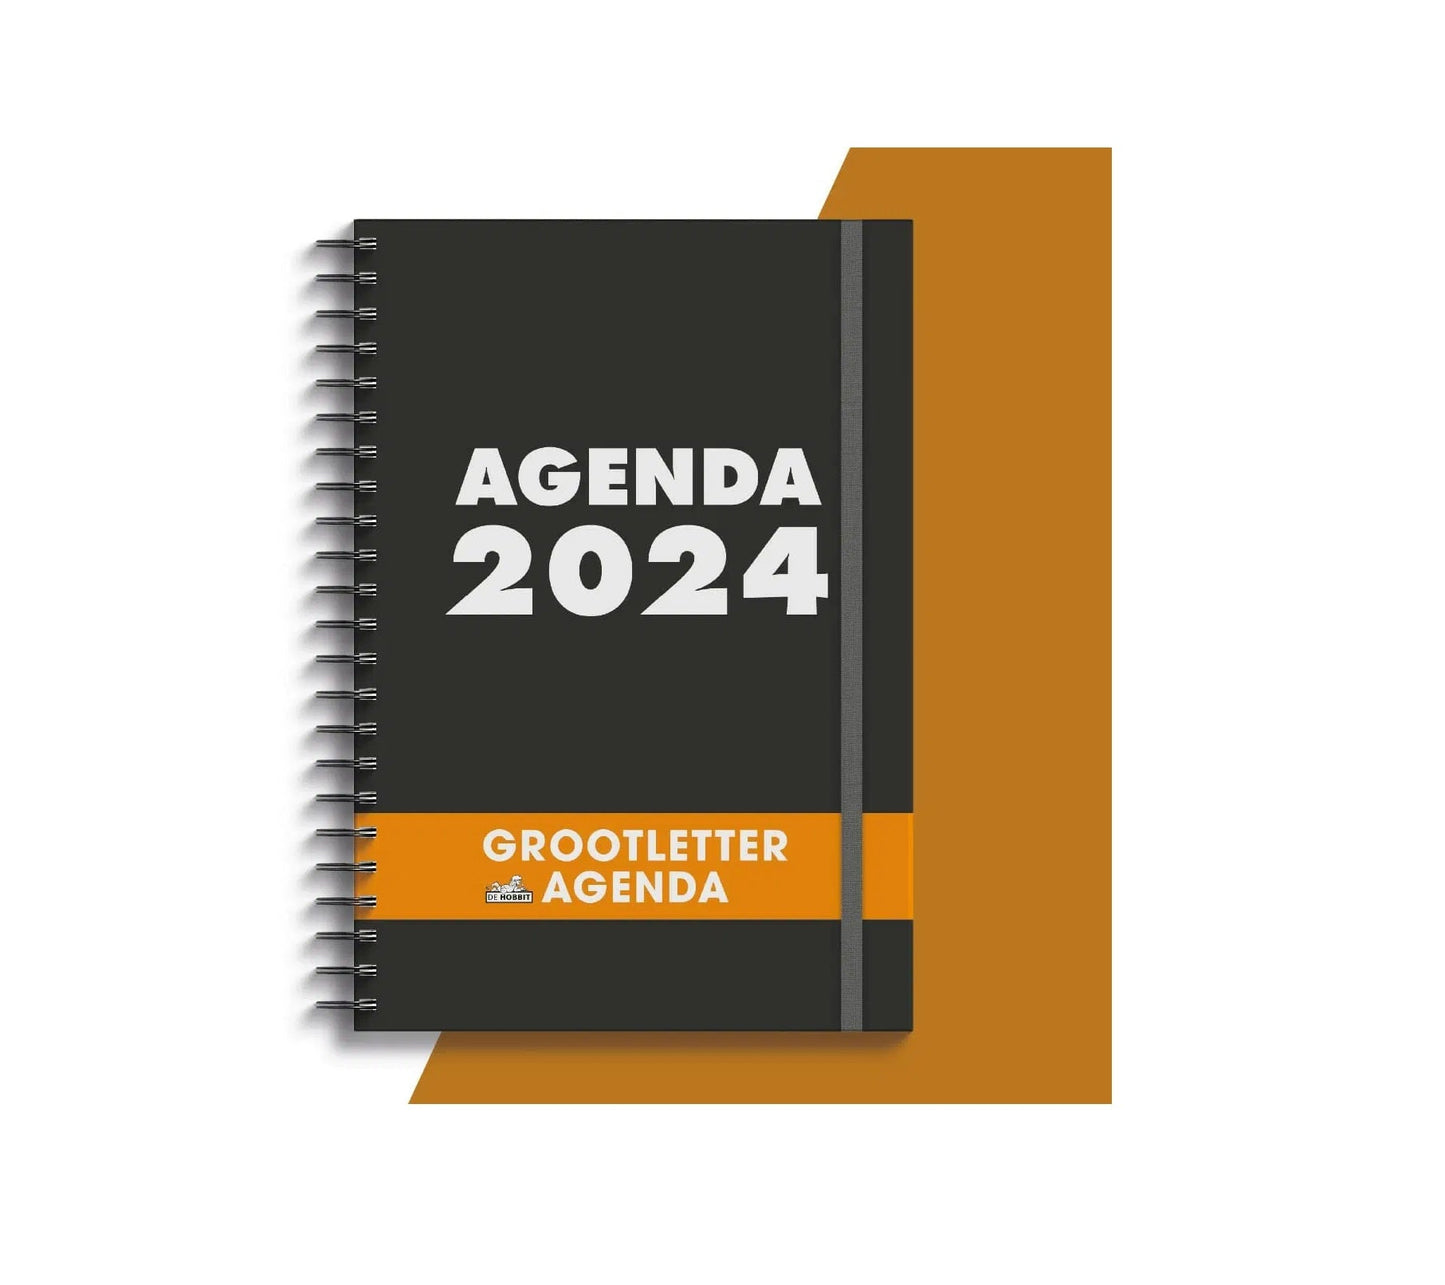 Low Vision Grootletter Agenda 2024 Kopen van  Low Vision?- Vanaf €16.95 bij Pucshop.nl